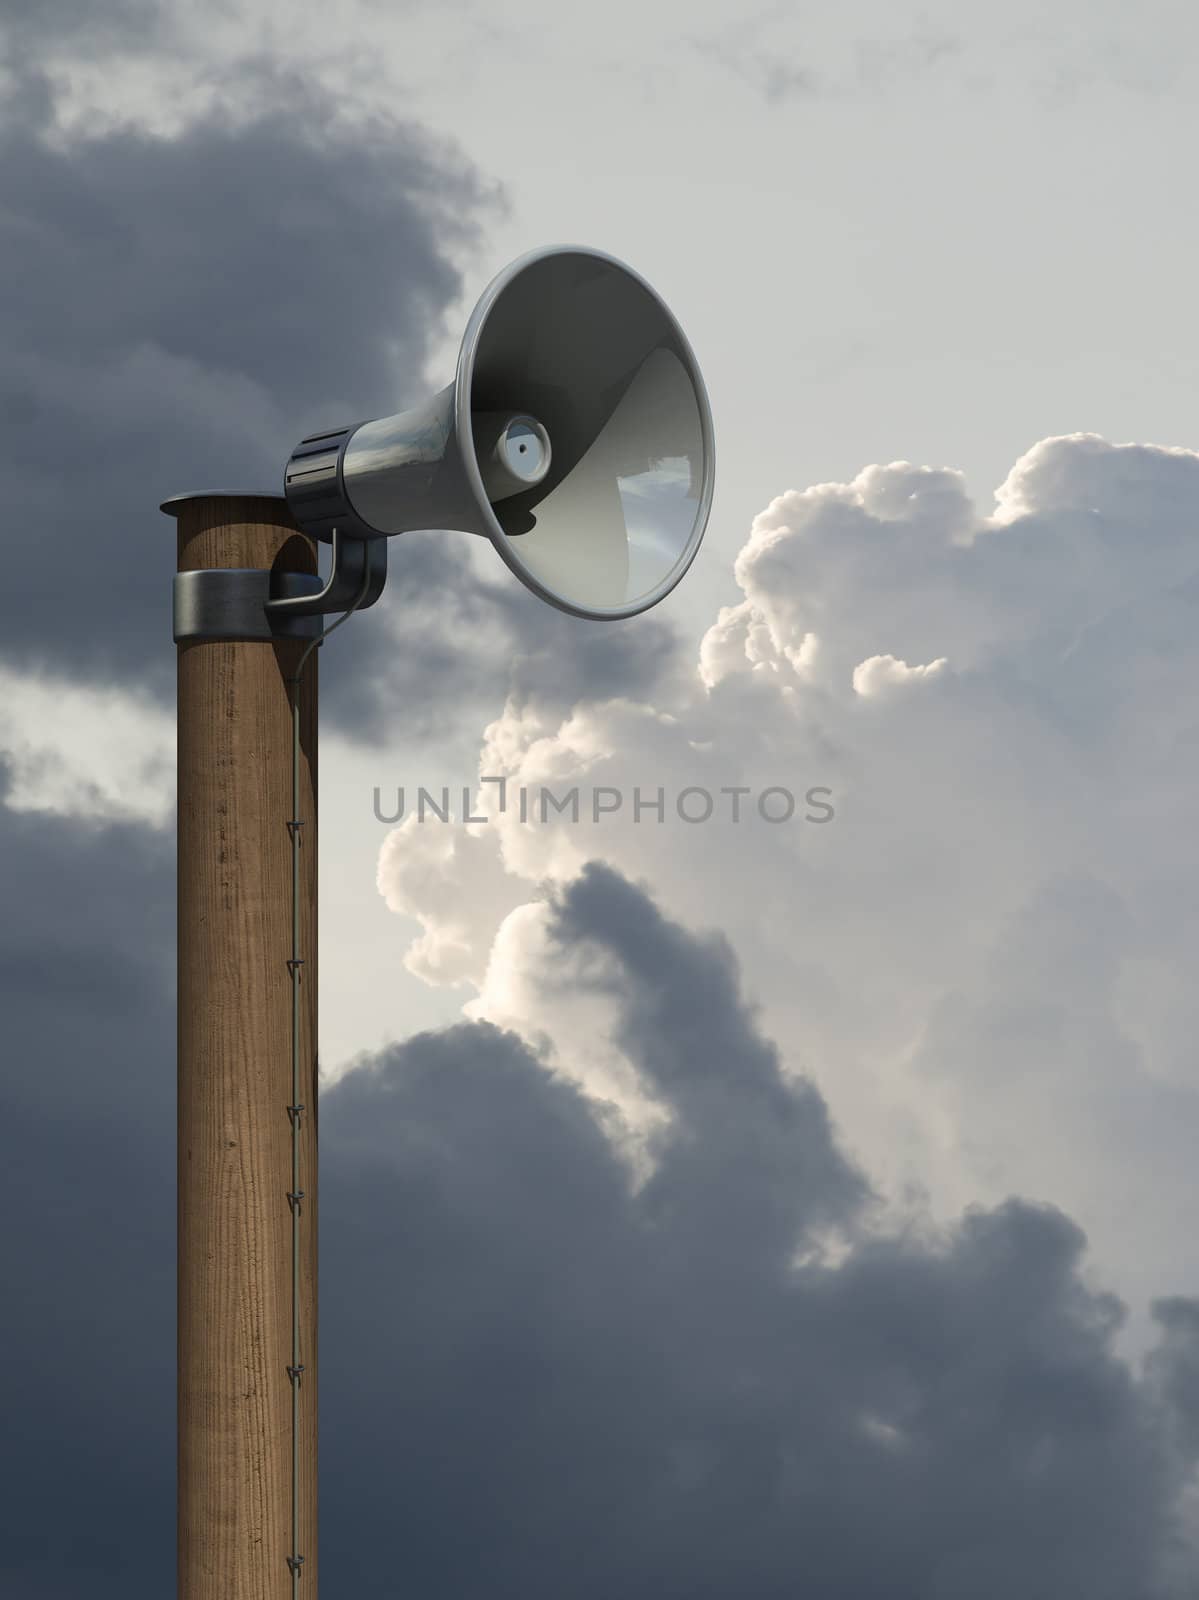 Loudspeaker on wooden pole against stormy sky